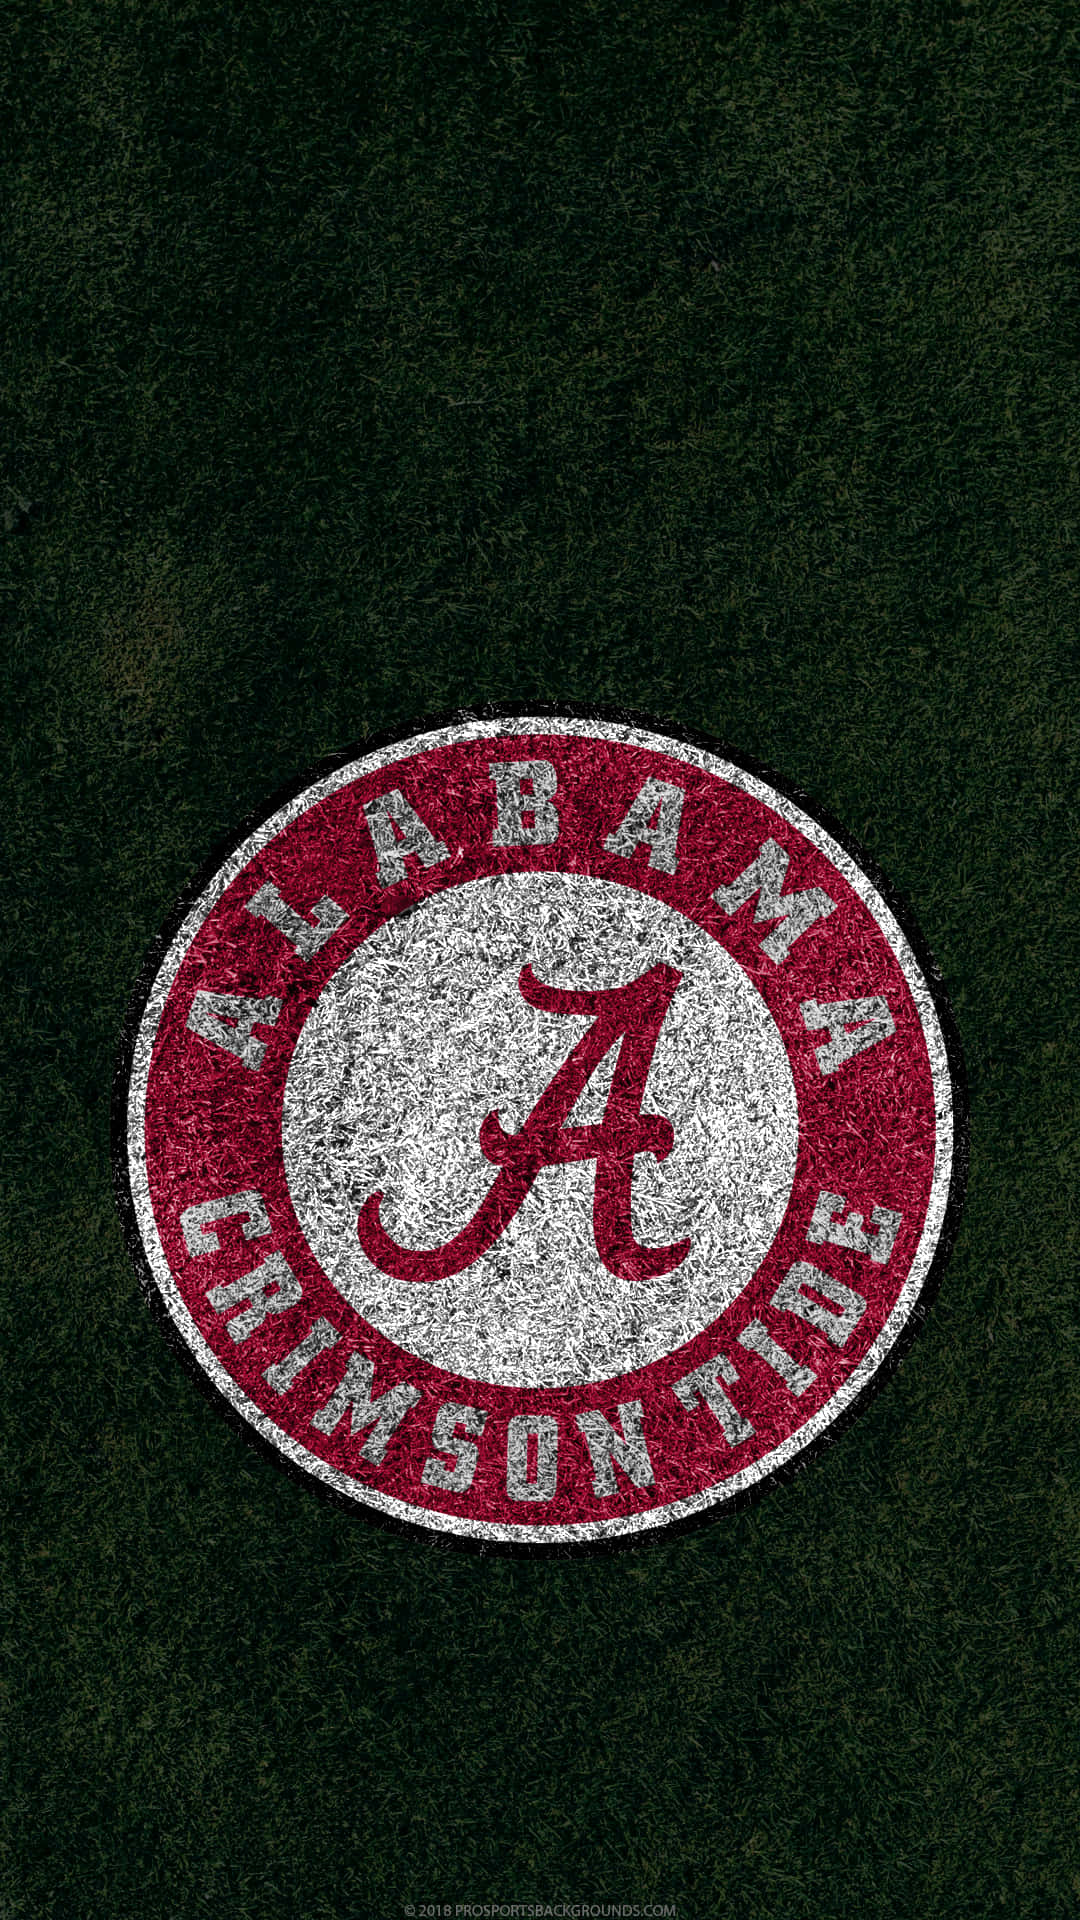 Alabama Fodbold Iphone 1080 X 1920 Wallpaper